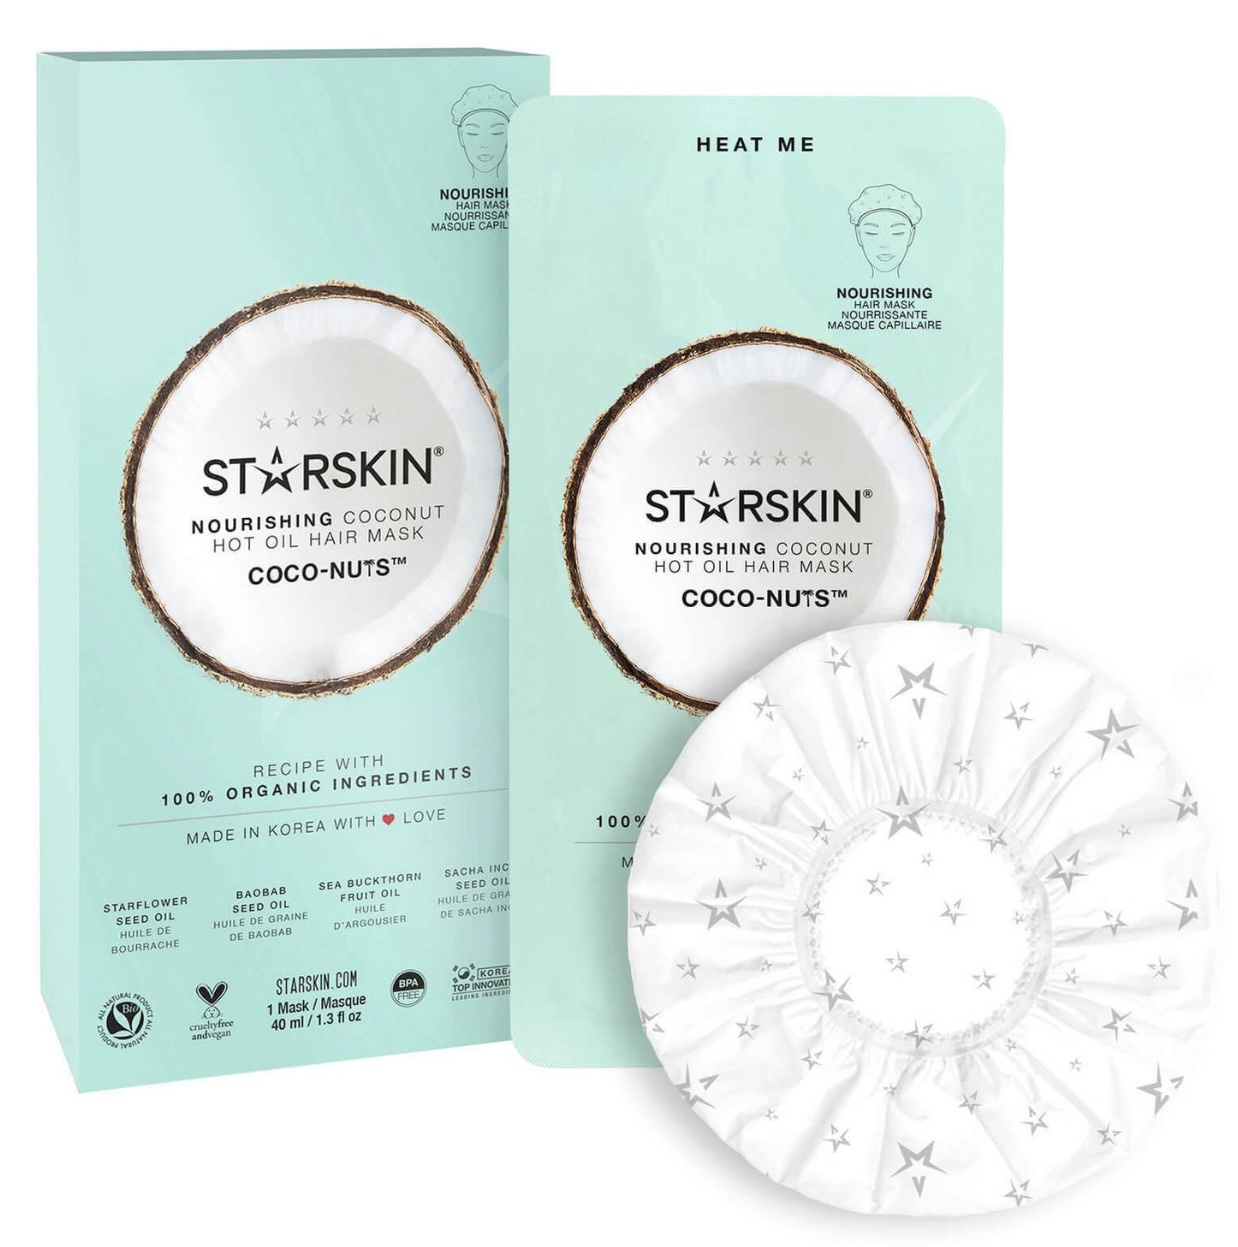 Starskin Coco-Nuts Nourishing Coconut Hot Oil Hair Mask